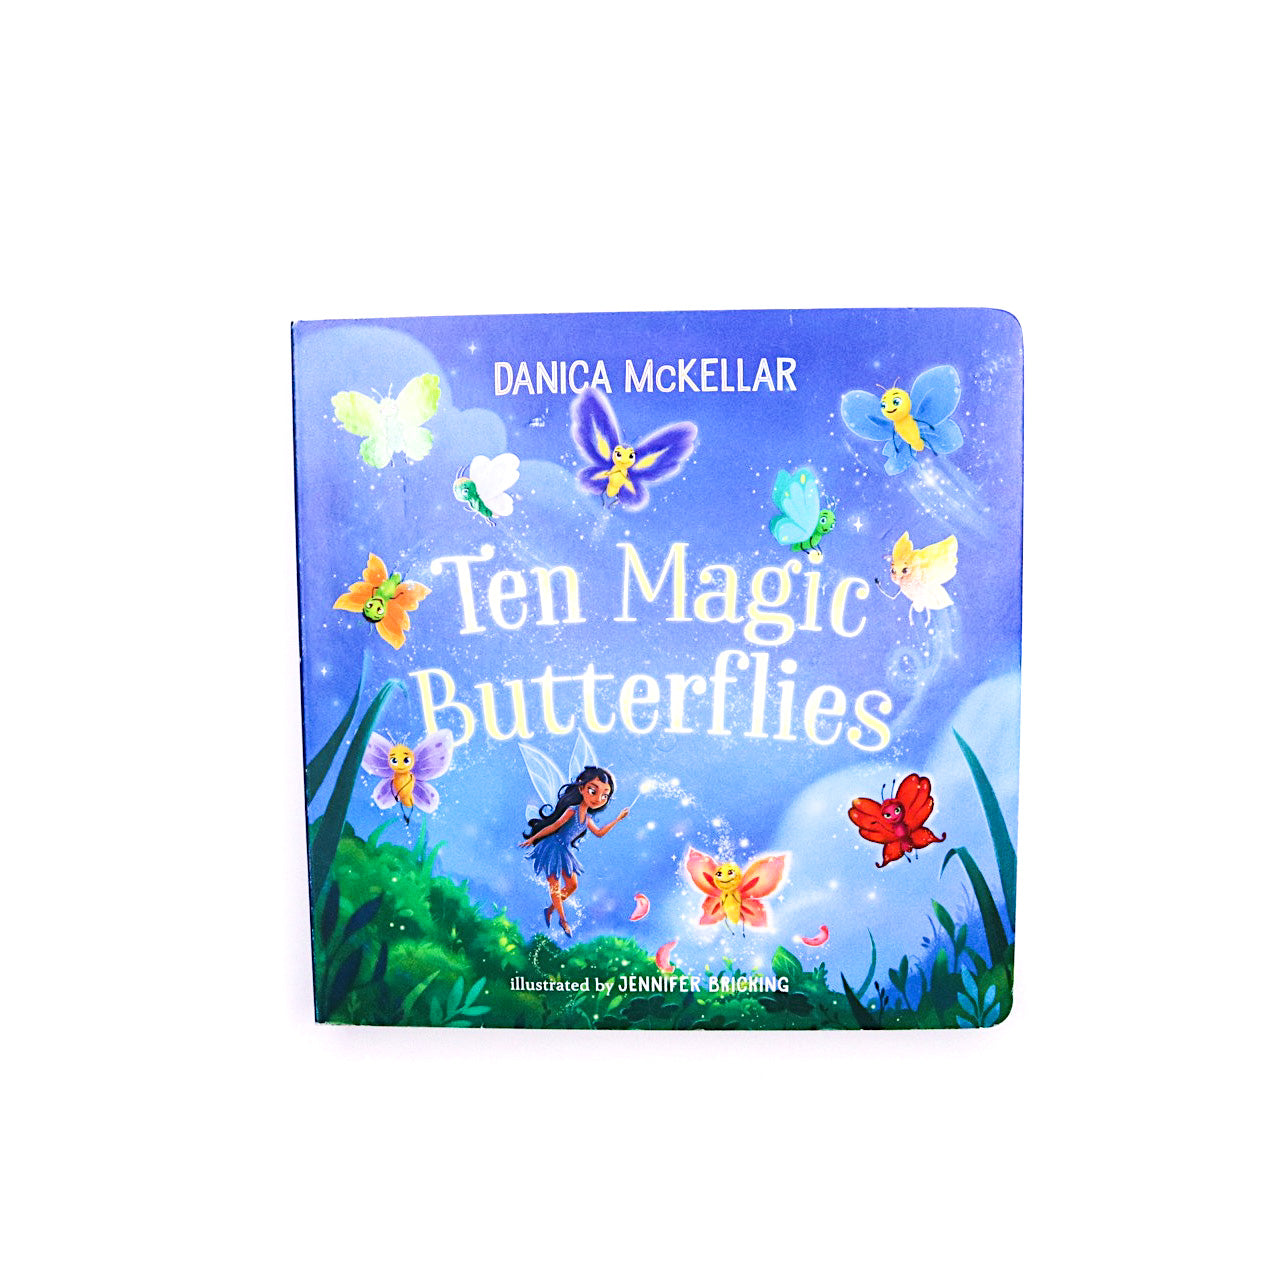 Ten Magic Butterflies by Danica McKellar